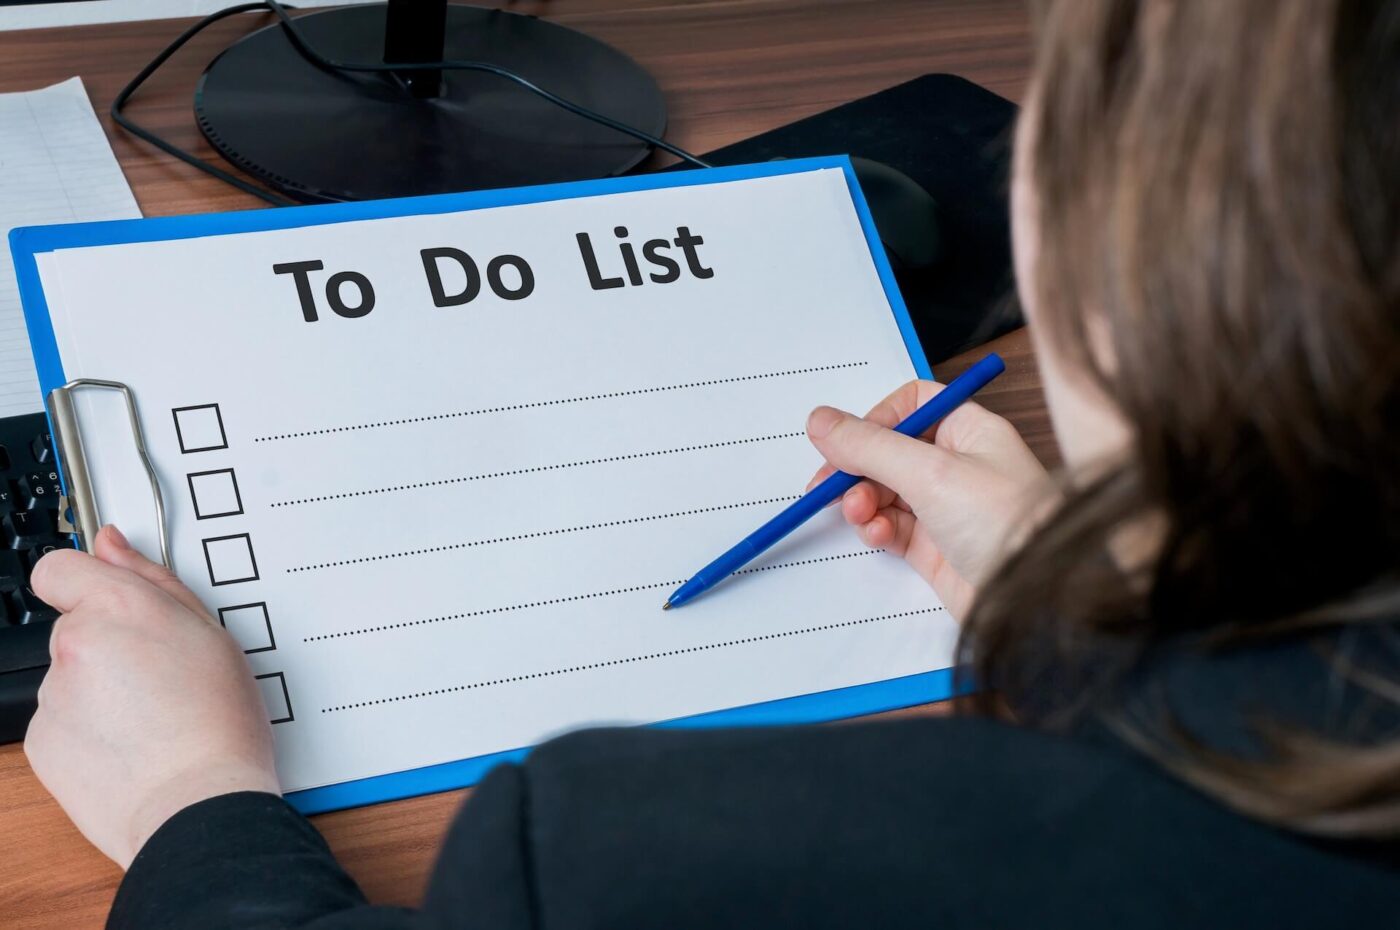 Woman writing a to-do list